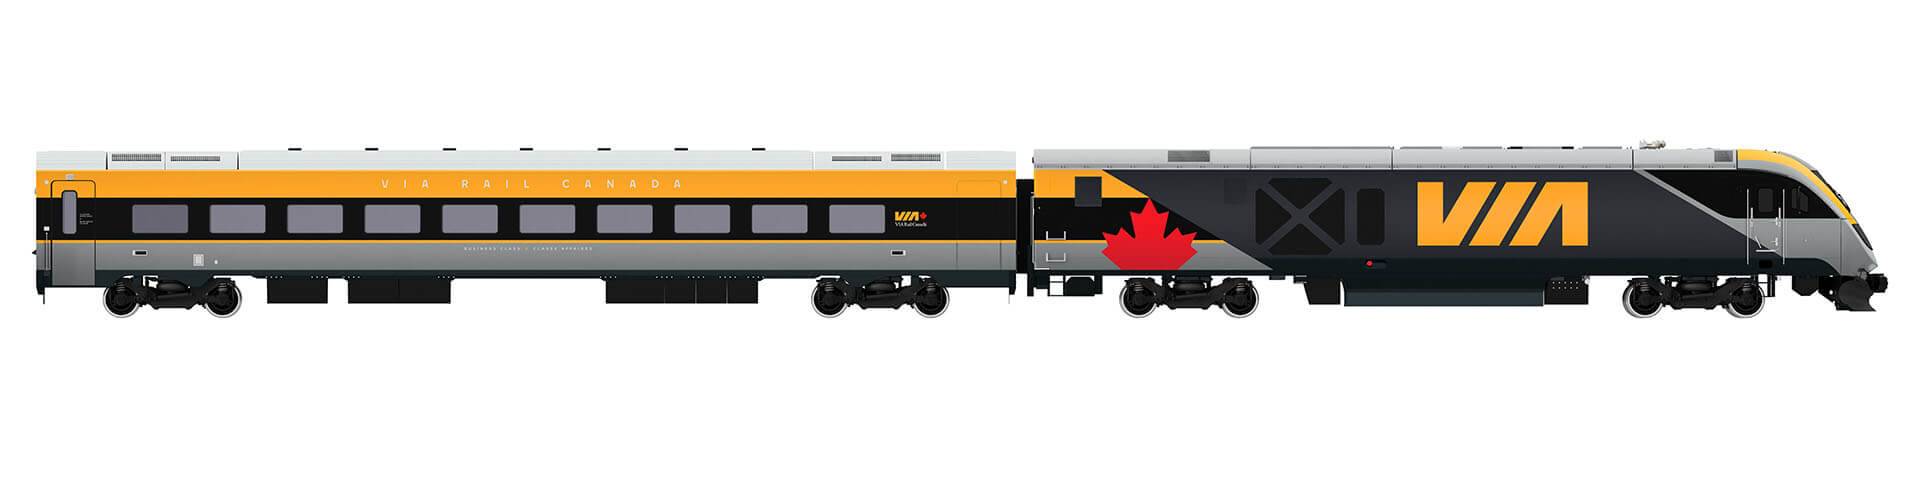 VIA Rail's bold train livery design in their brand colours